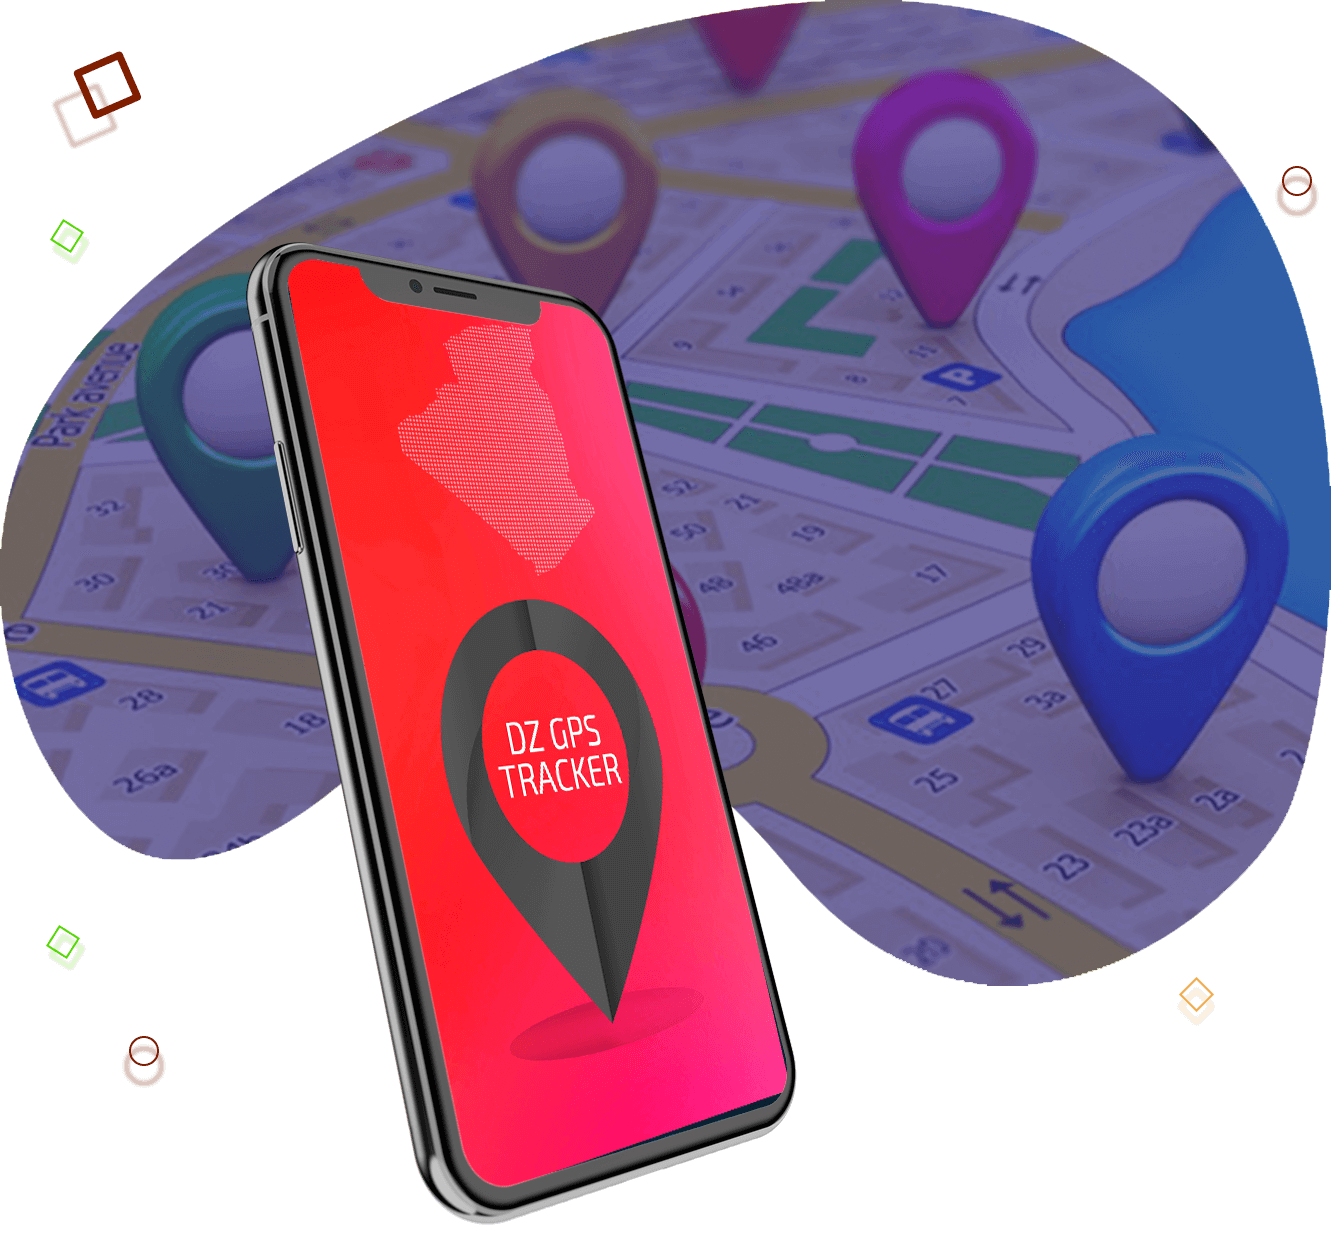 GPS software